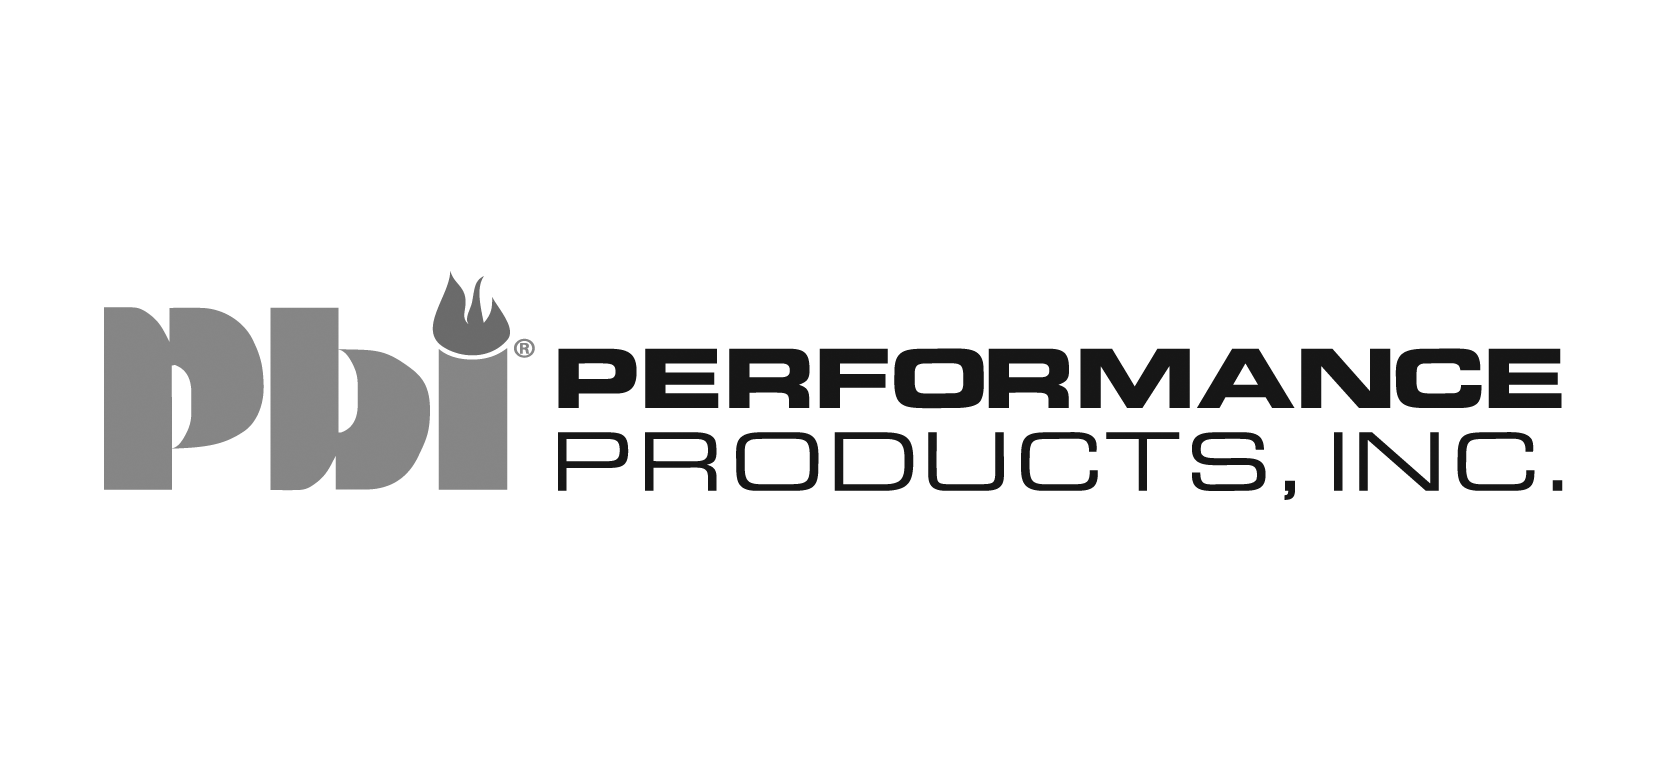 PBI Performance Products logo